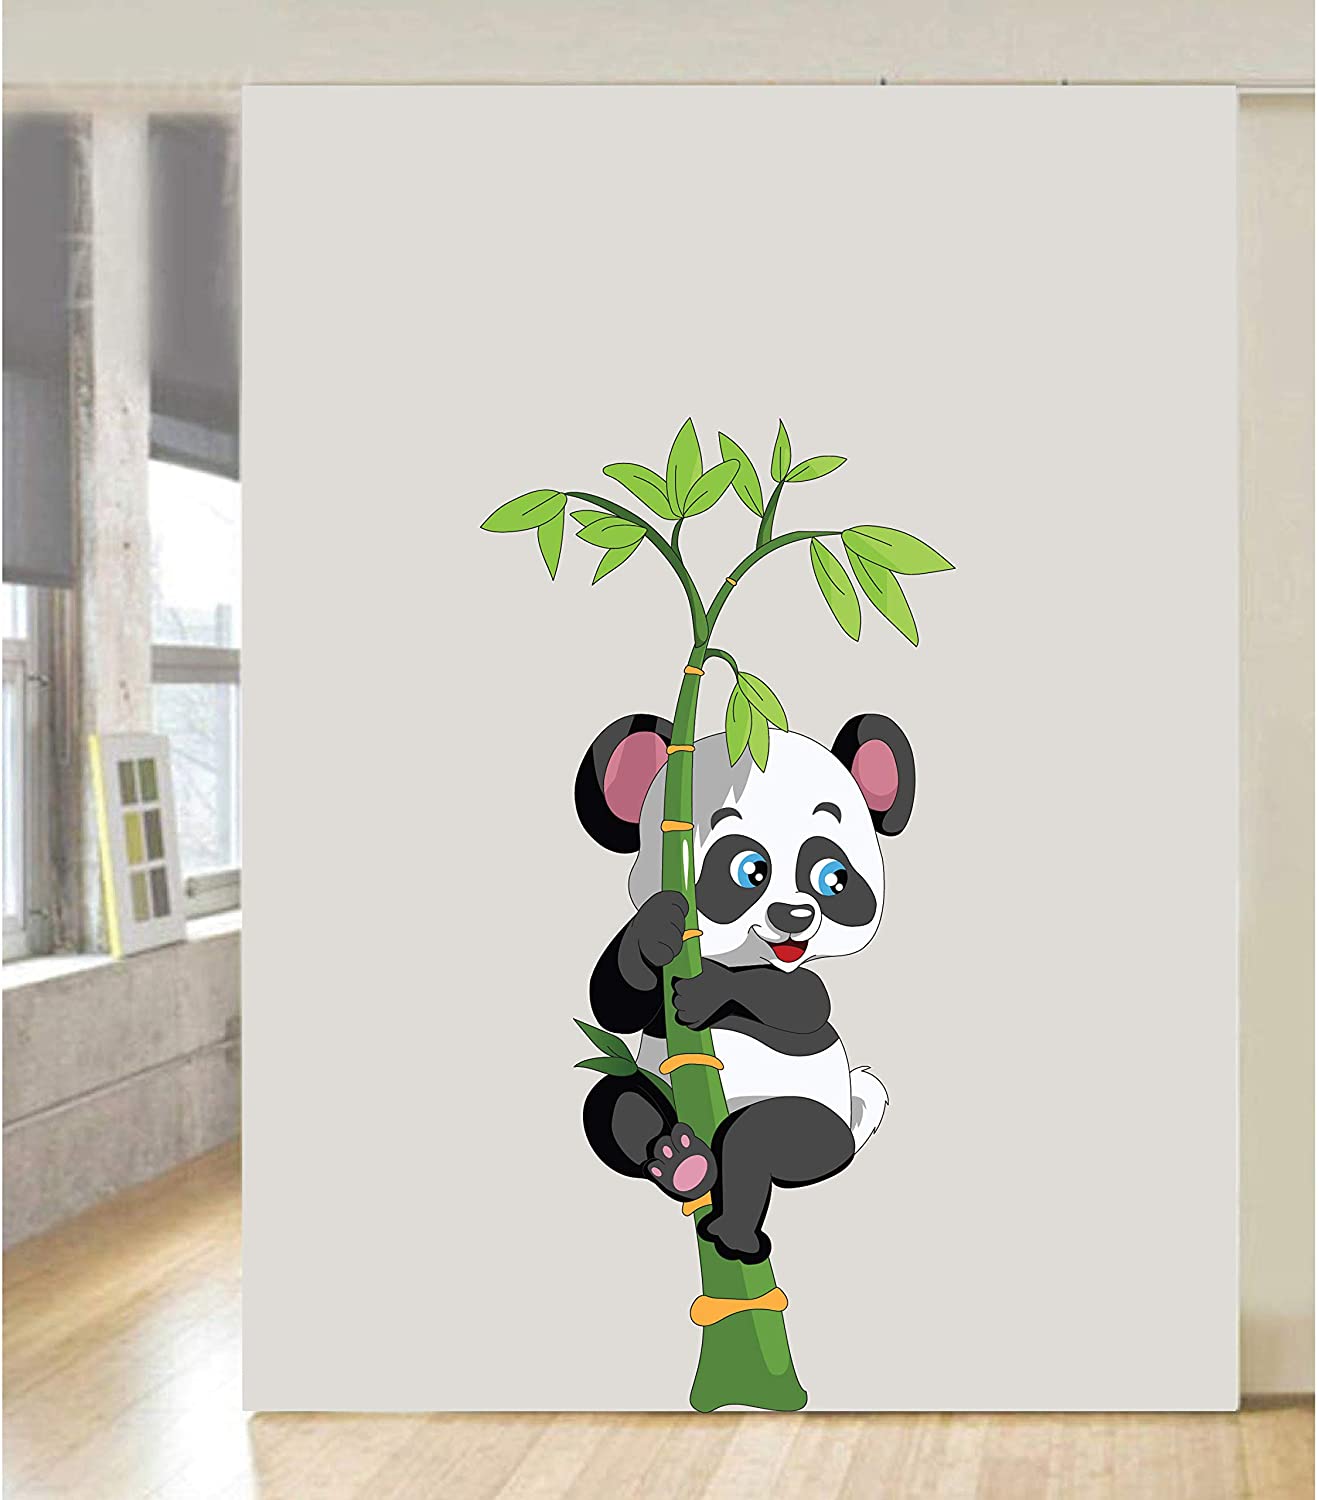 woopme Cute Panda Girls Room Wall Sticker for Home Decor Living